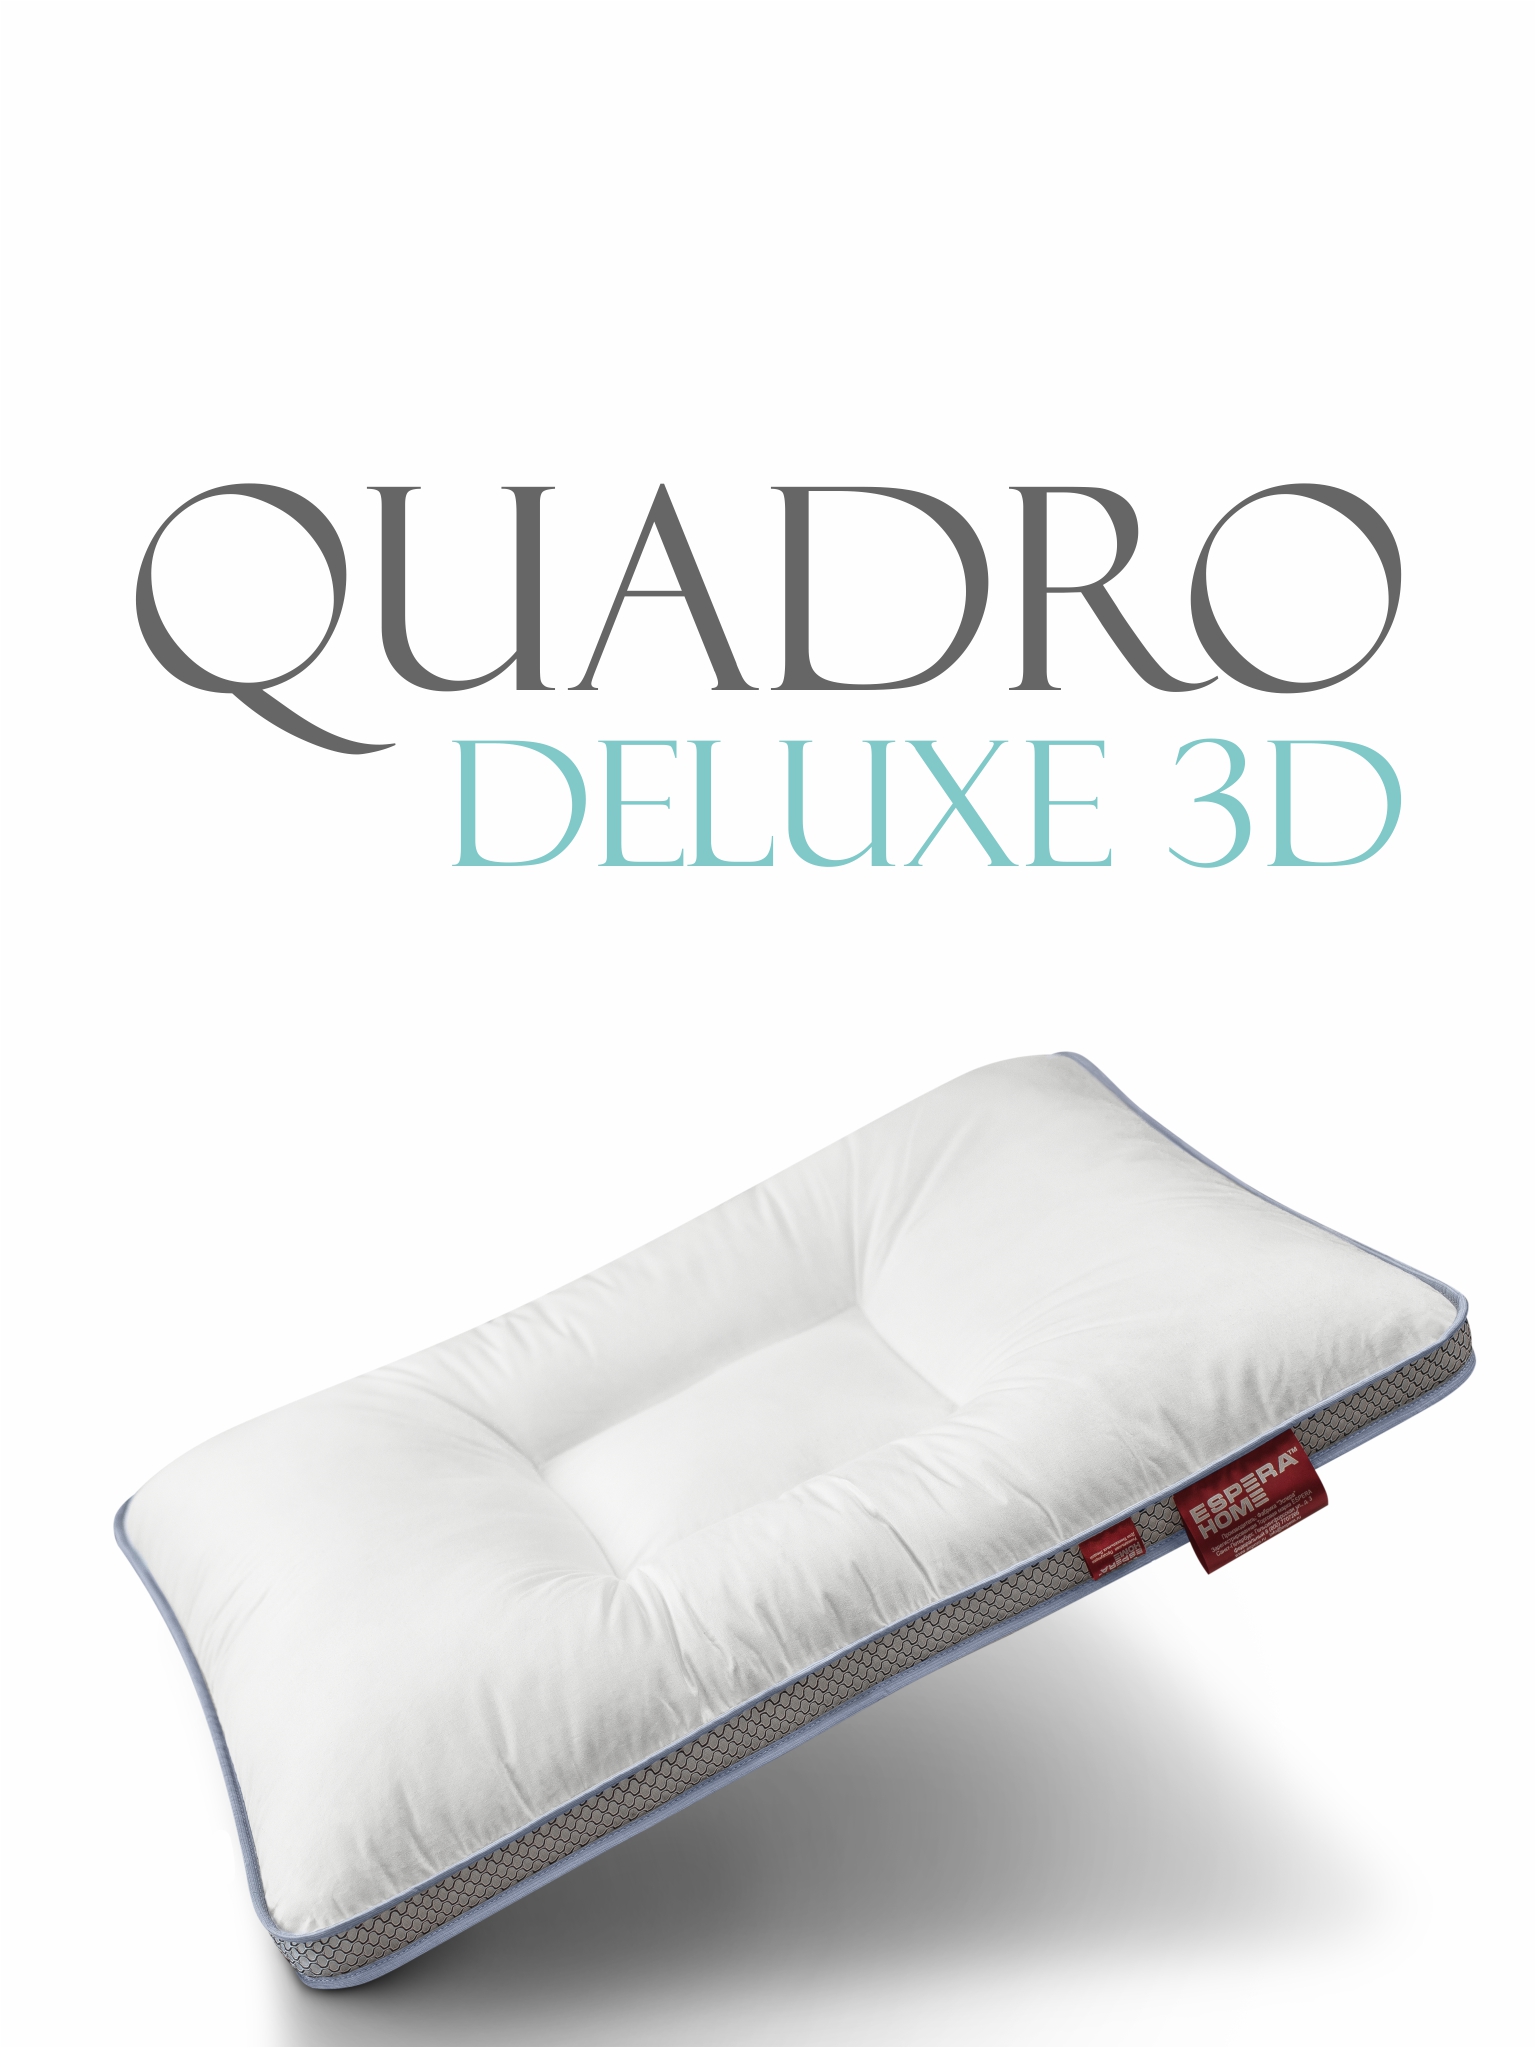 Подушка • Quadro DeLux 3D / Квадро Делюкс 3Д •  50х70 см